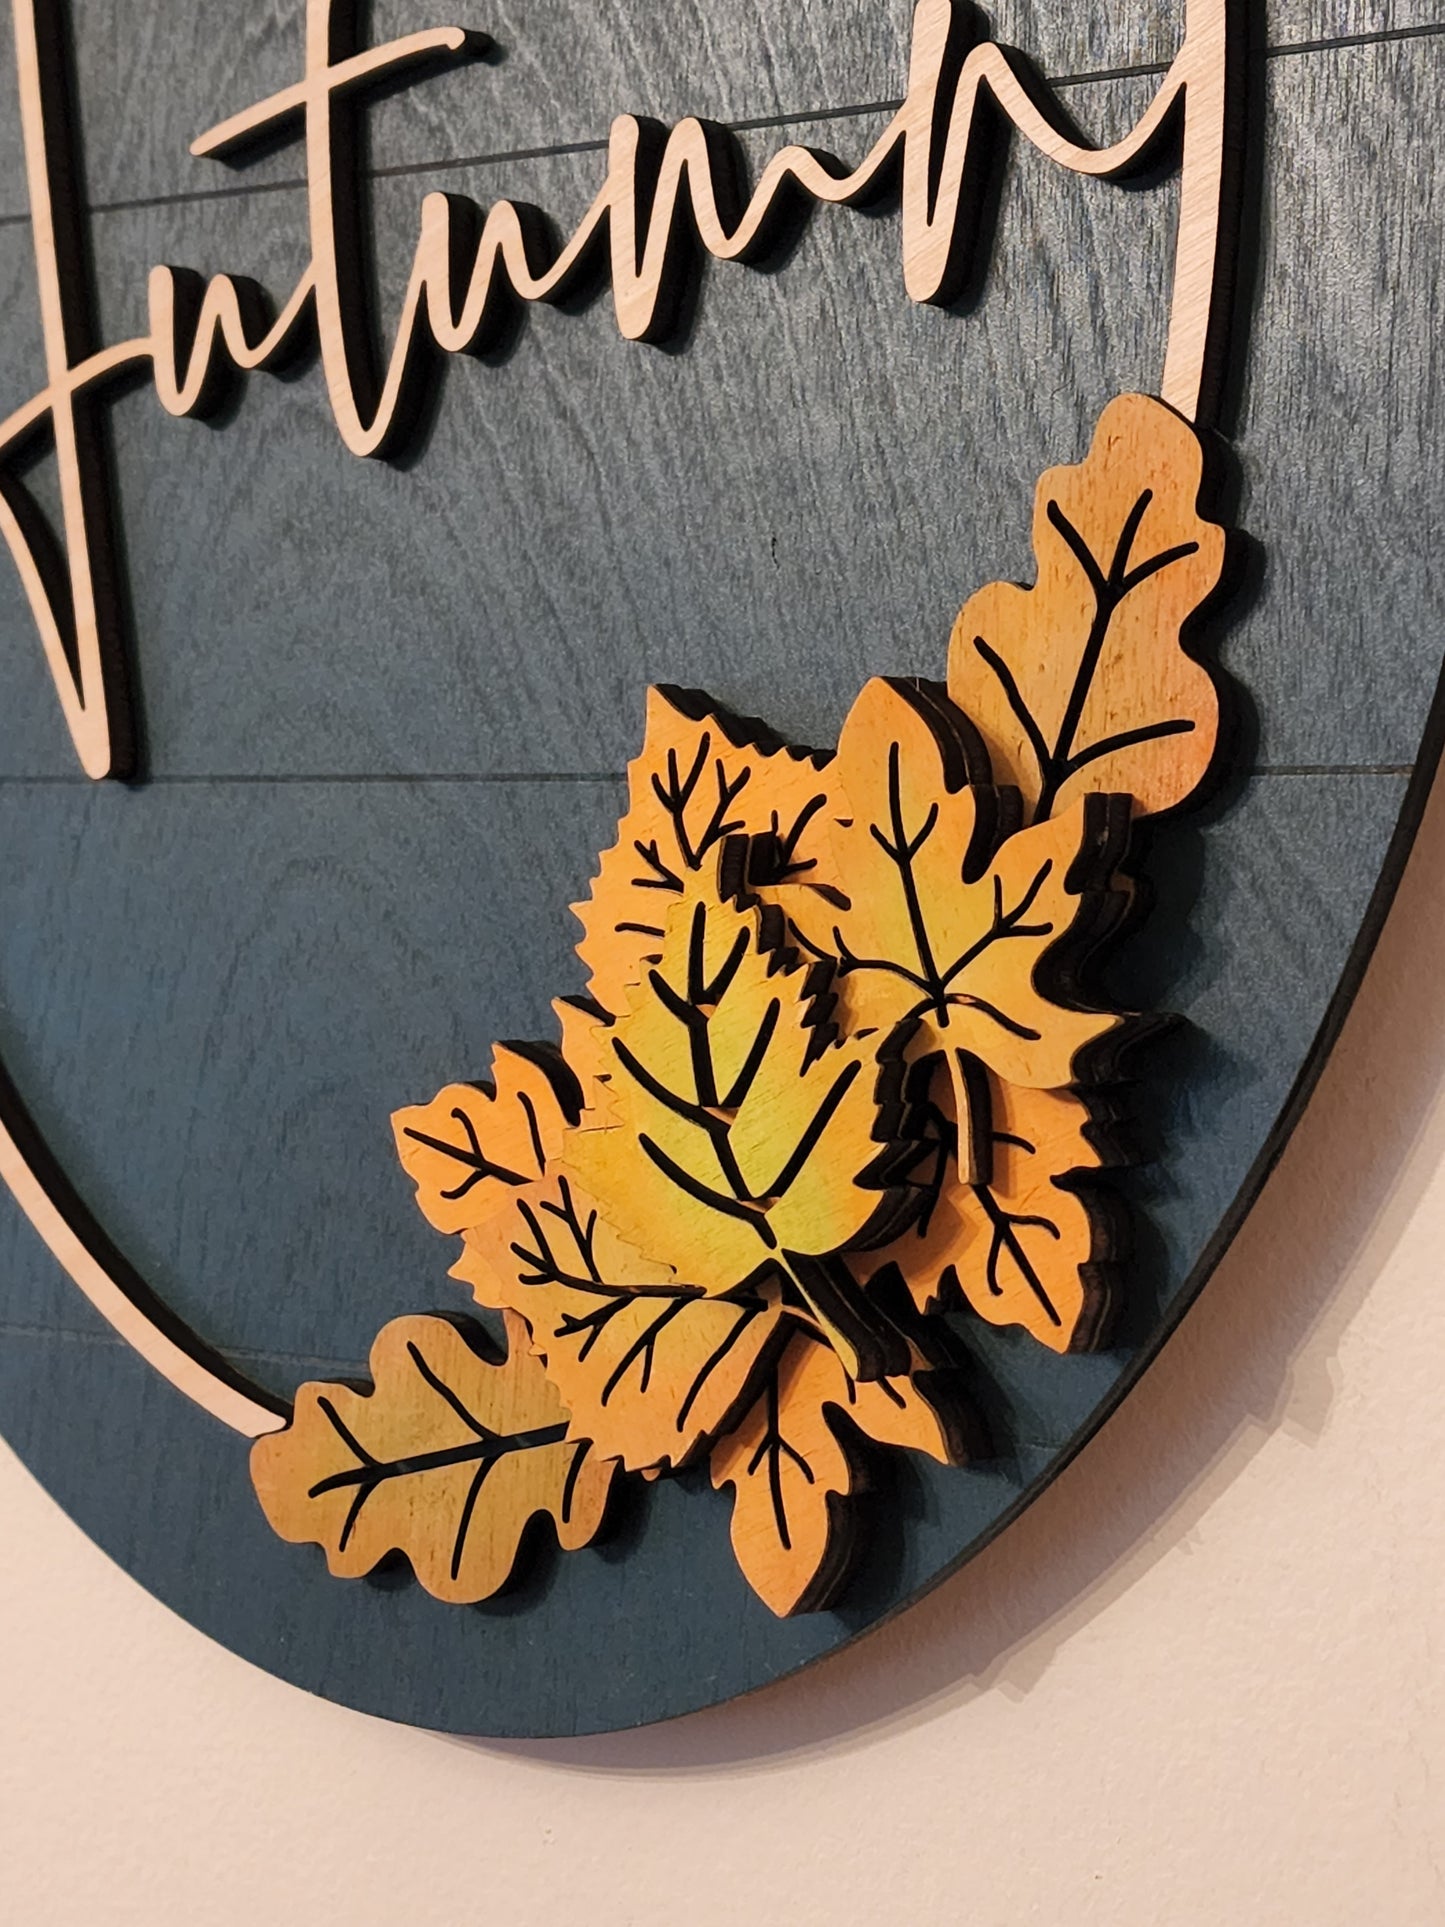 Hello Autumn Hanging Sign